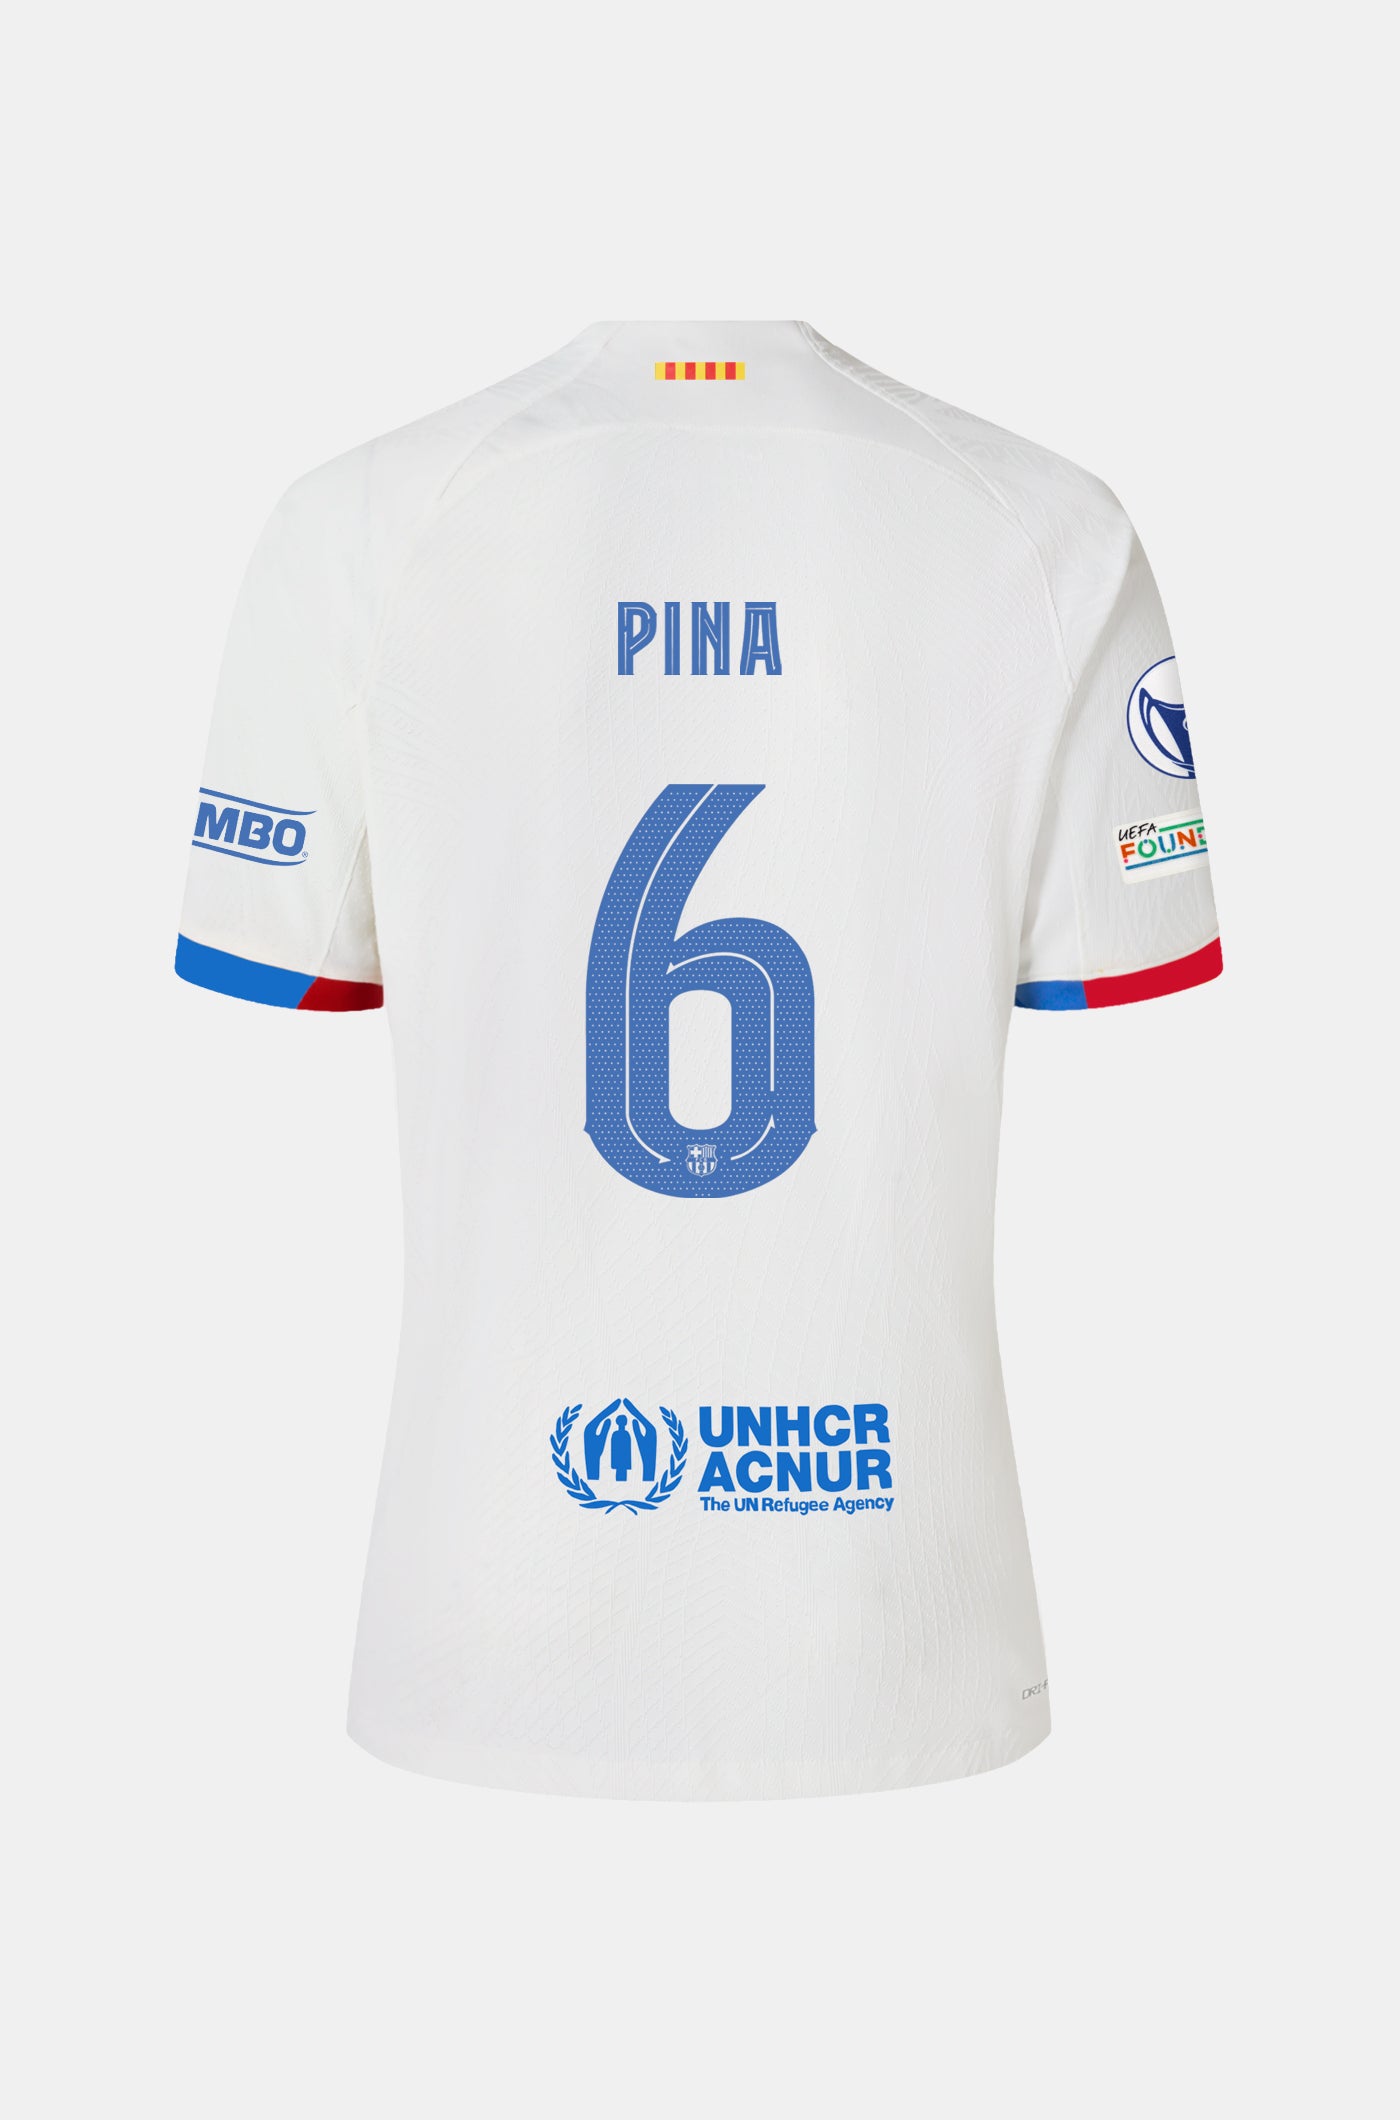 UWCL FC Barcelona Away Shirt 23/24 Player’s Edition - Women  - PINA